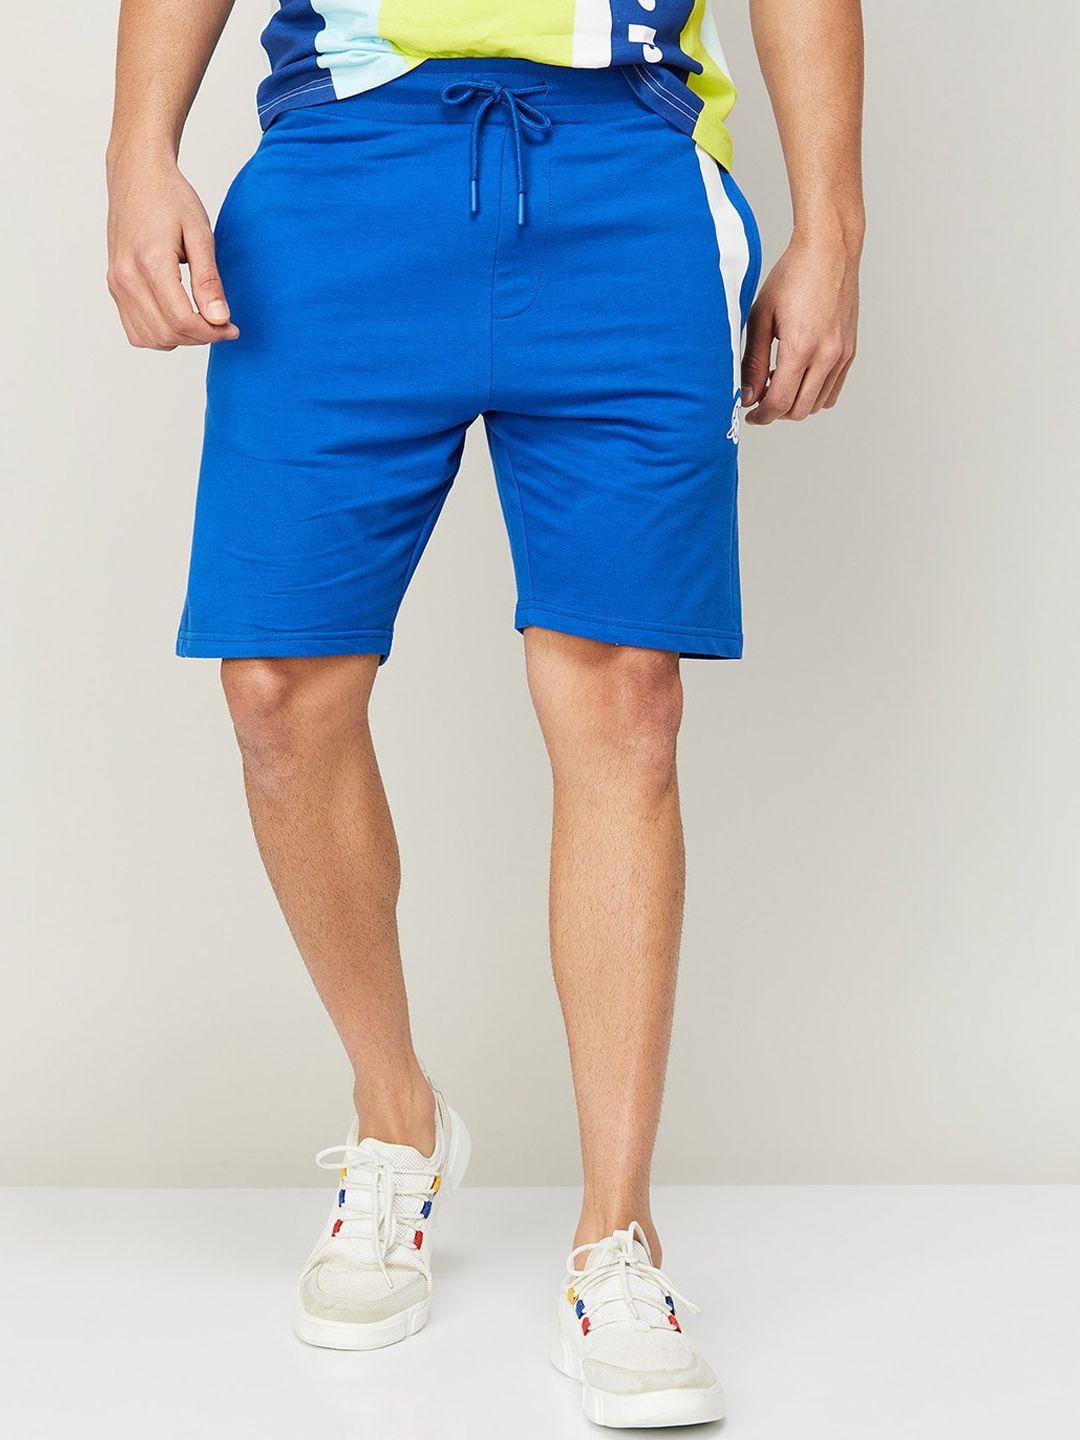 kappa-men-cotton-striped-training-or-gym-shorts